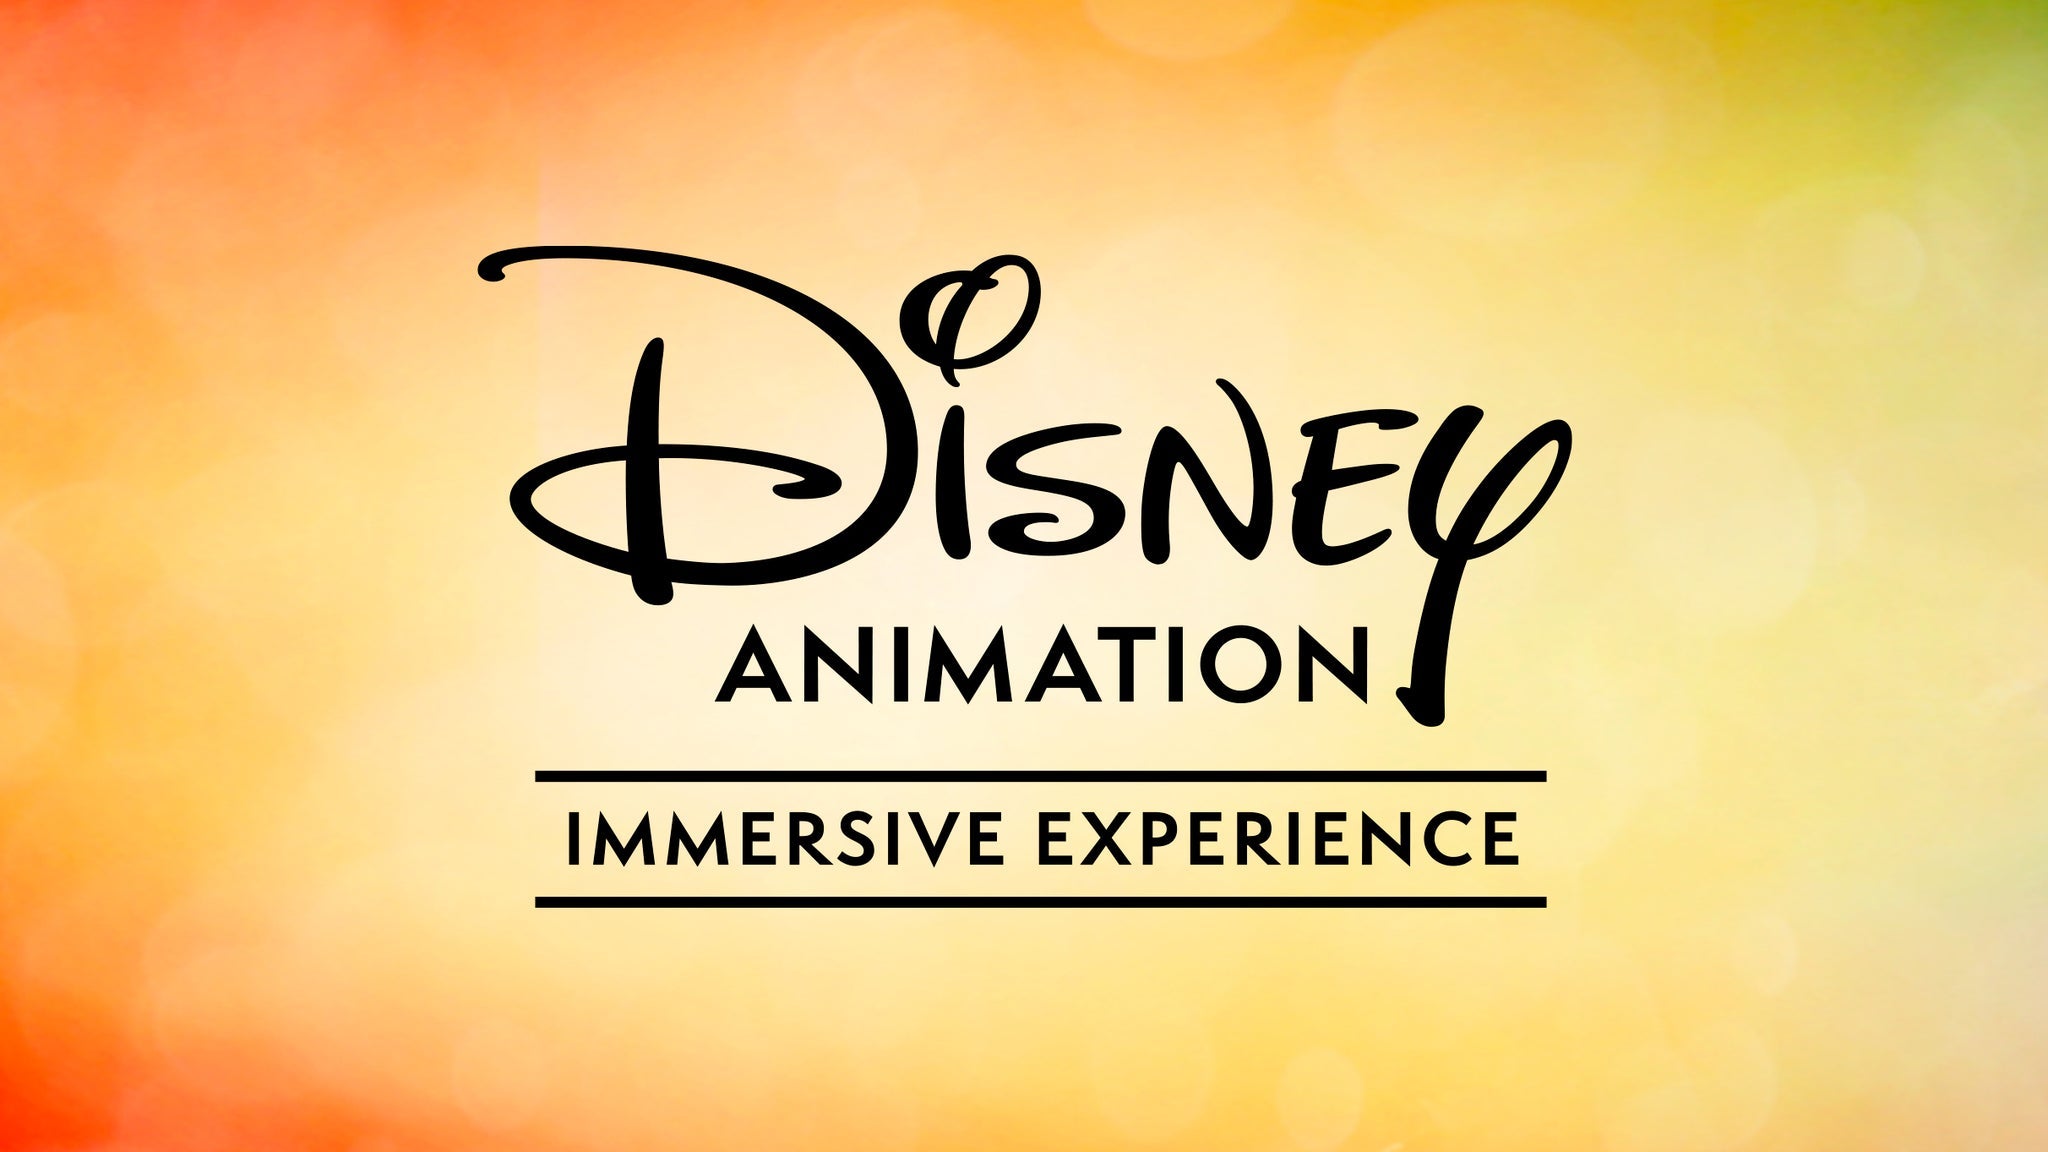 San Antonio - Disney Animation: Immersive Experience